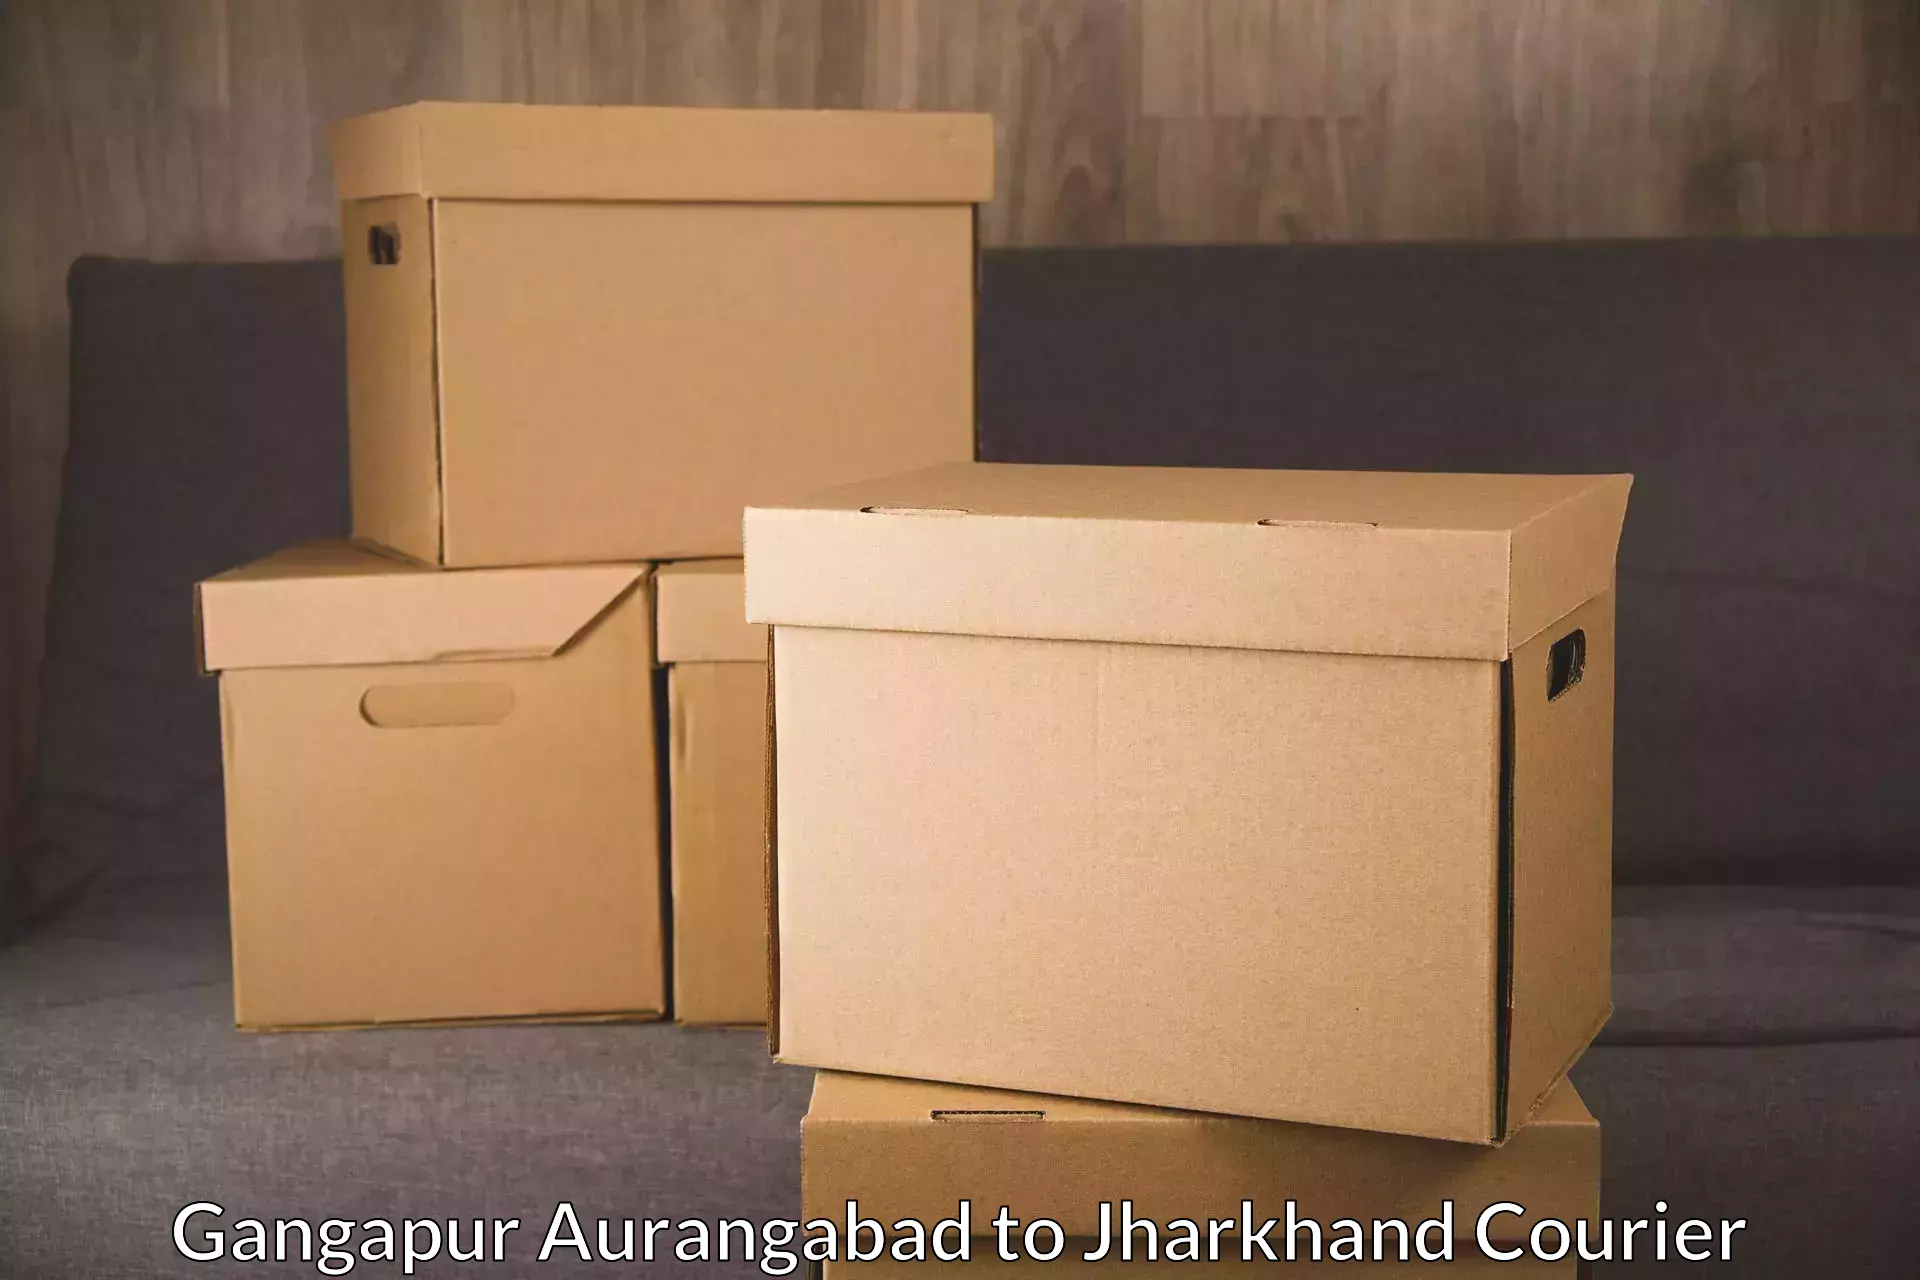 Express courier capabilities Gangapur Aurangabad to Dhanbad